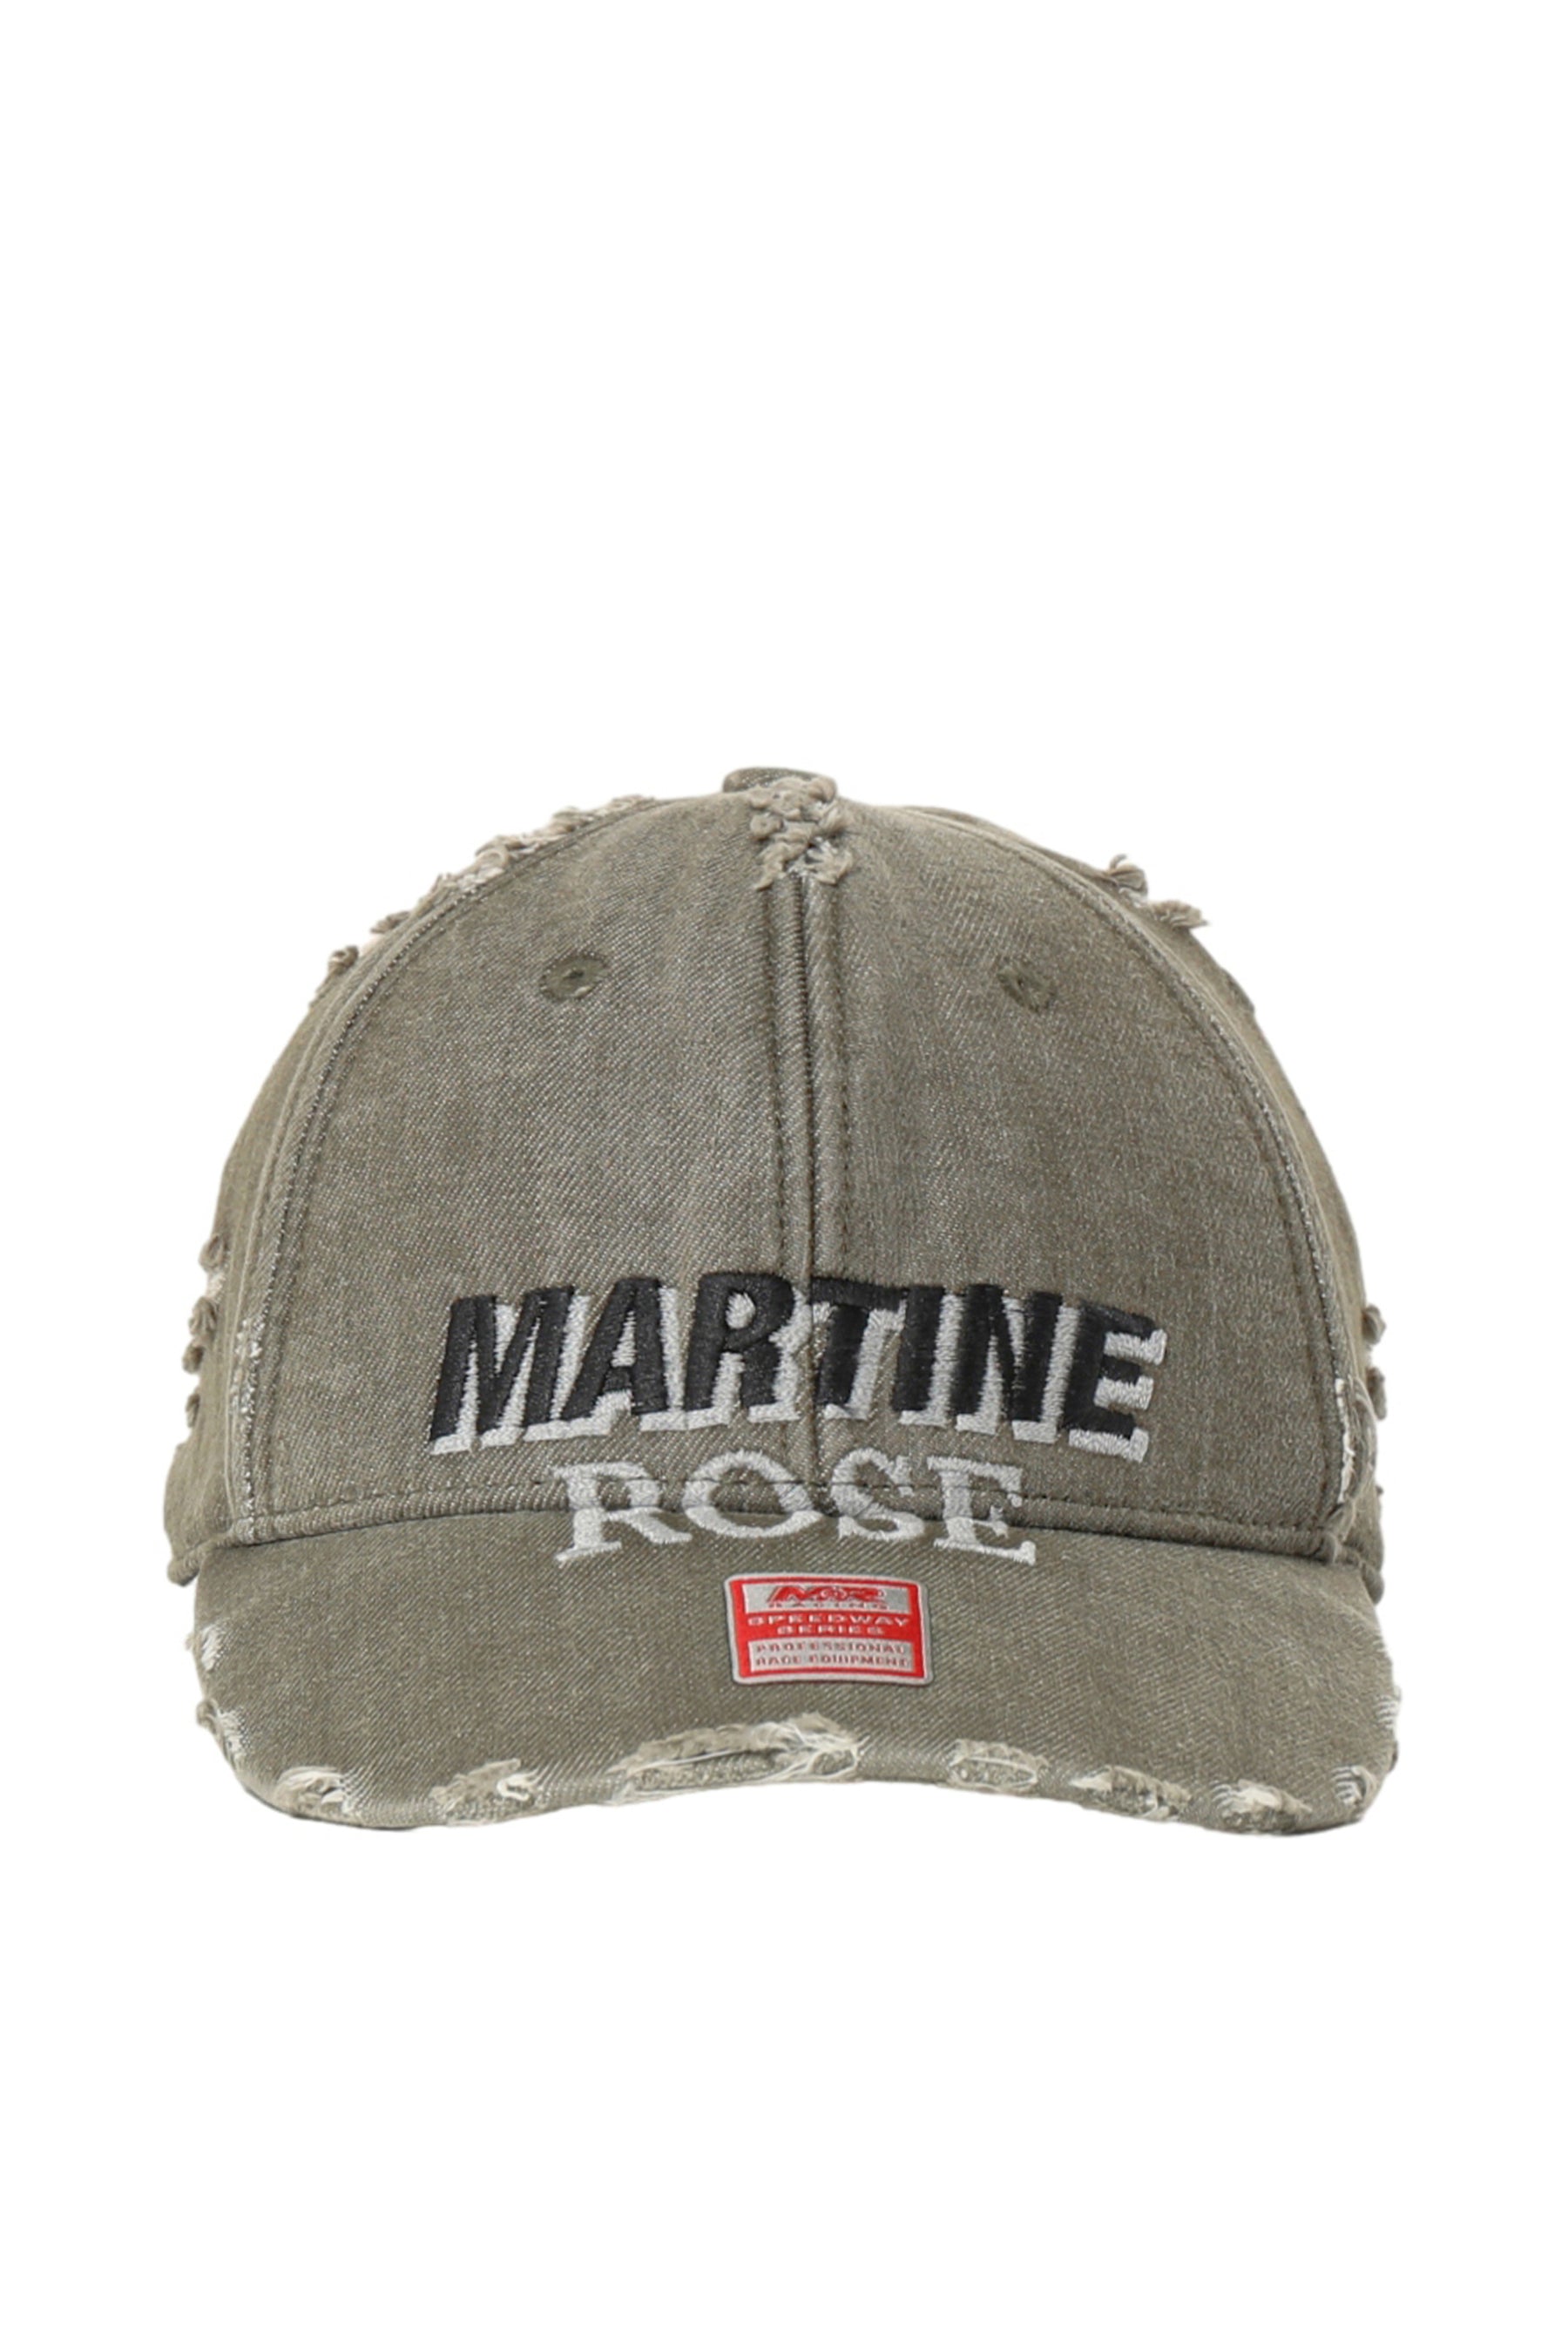 Martine Rose マーティン ローズ FW23 ROLLED BACK CAP / GRN MARTINE